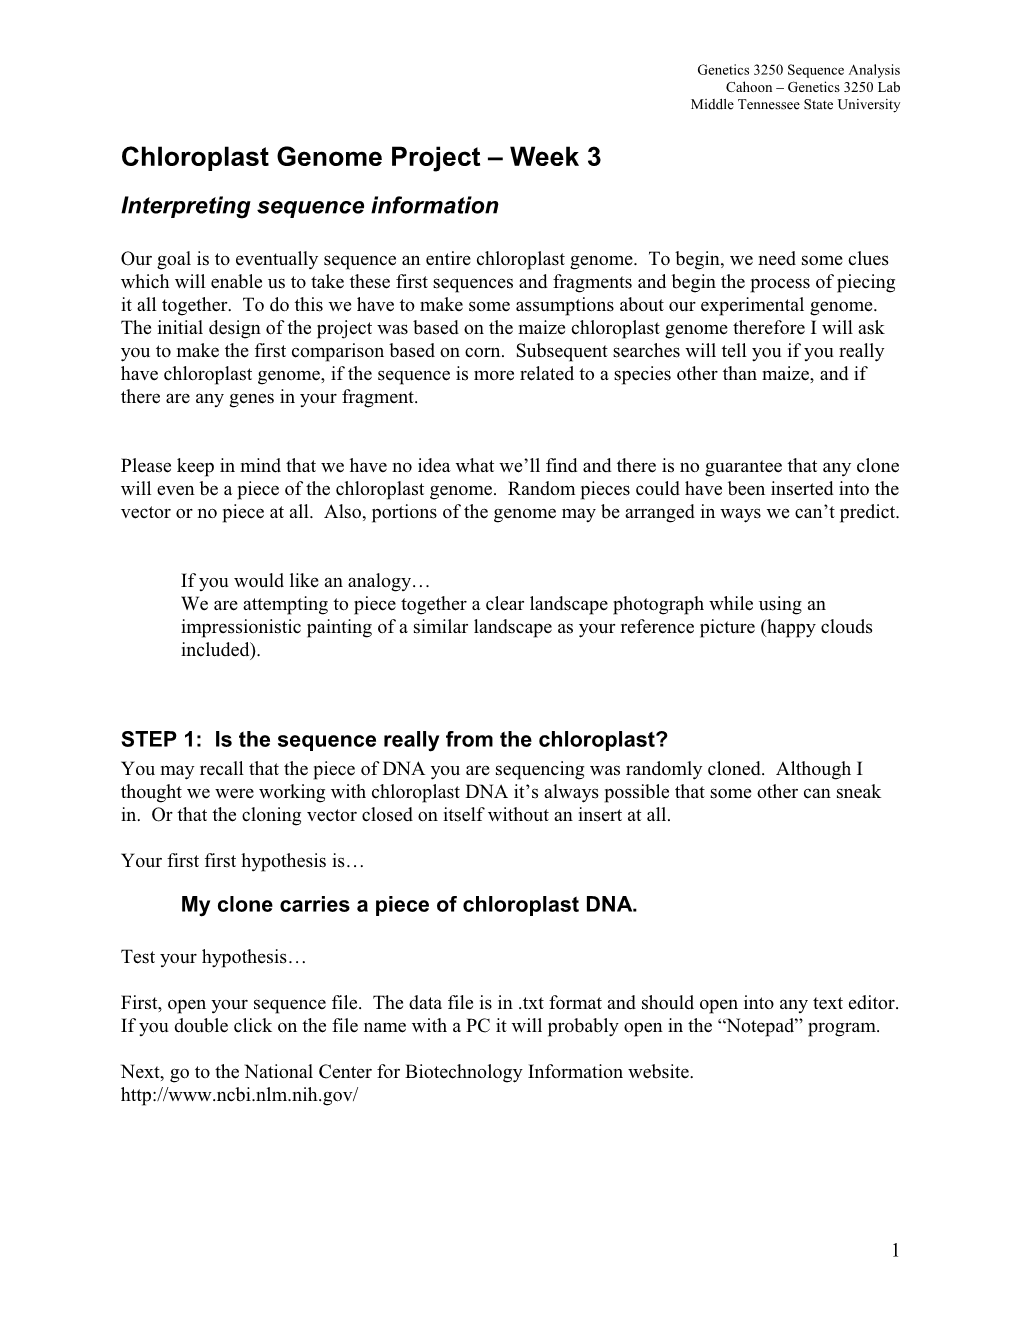 Chloroplast Genome Project Week 3